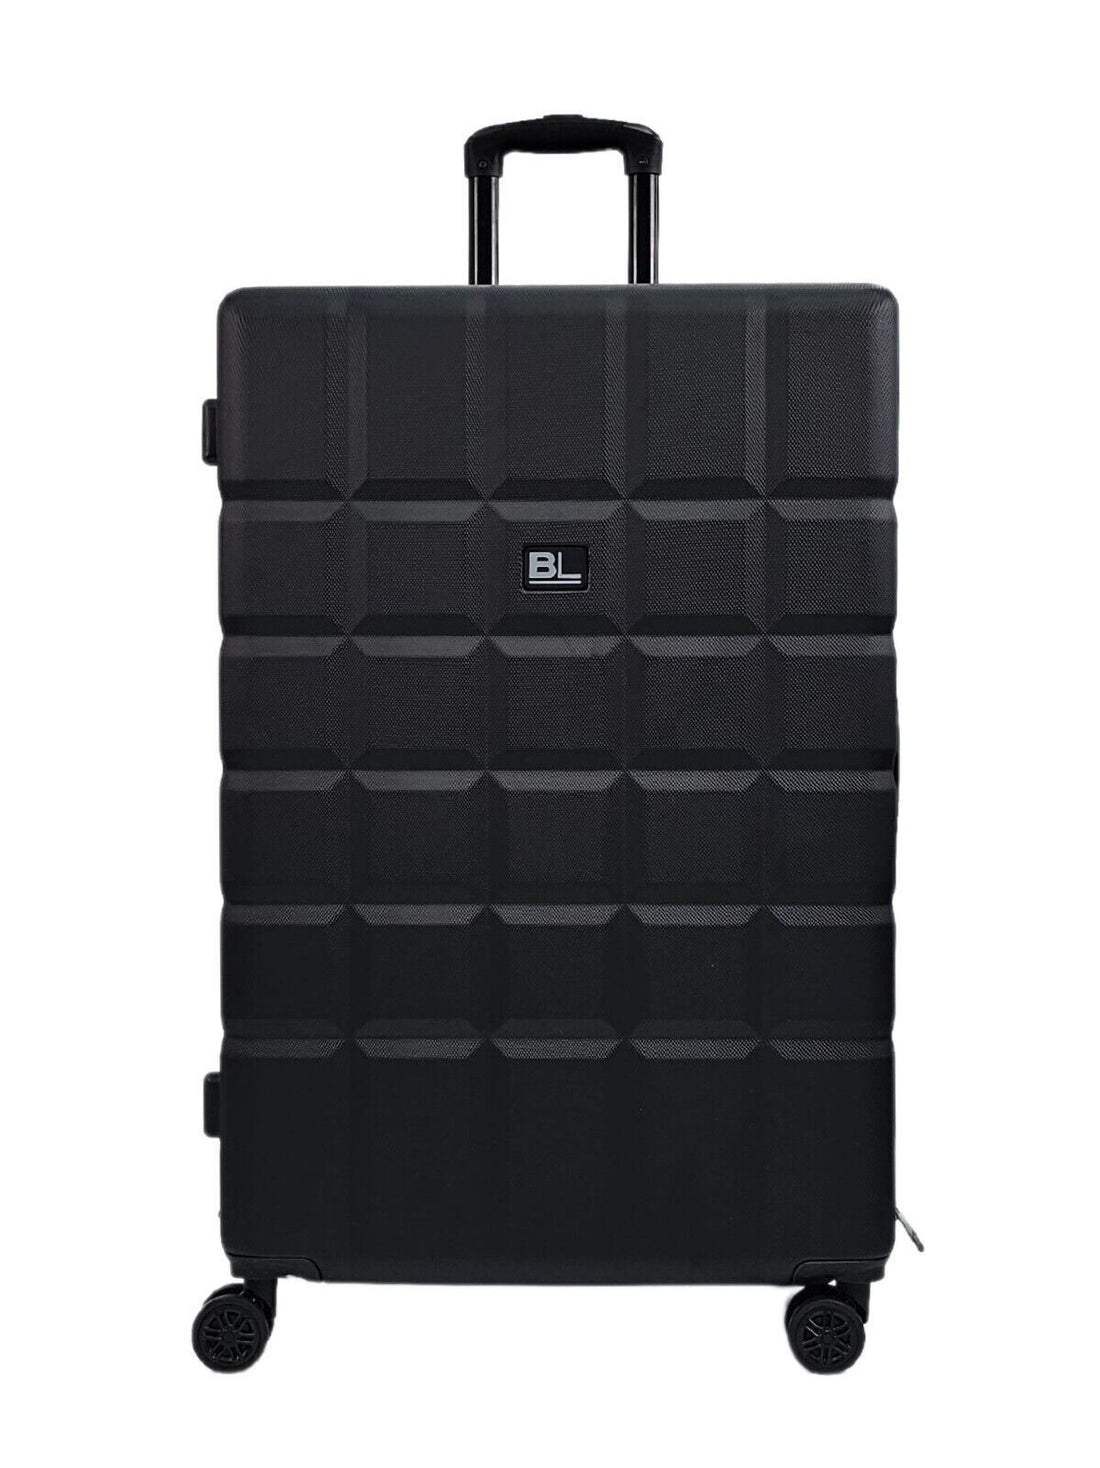 Black Hard Shell Classic Suitcase Set 8 Wheel Cabin Luggage Case Travel Bag